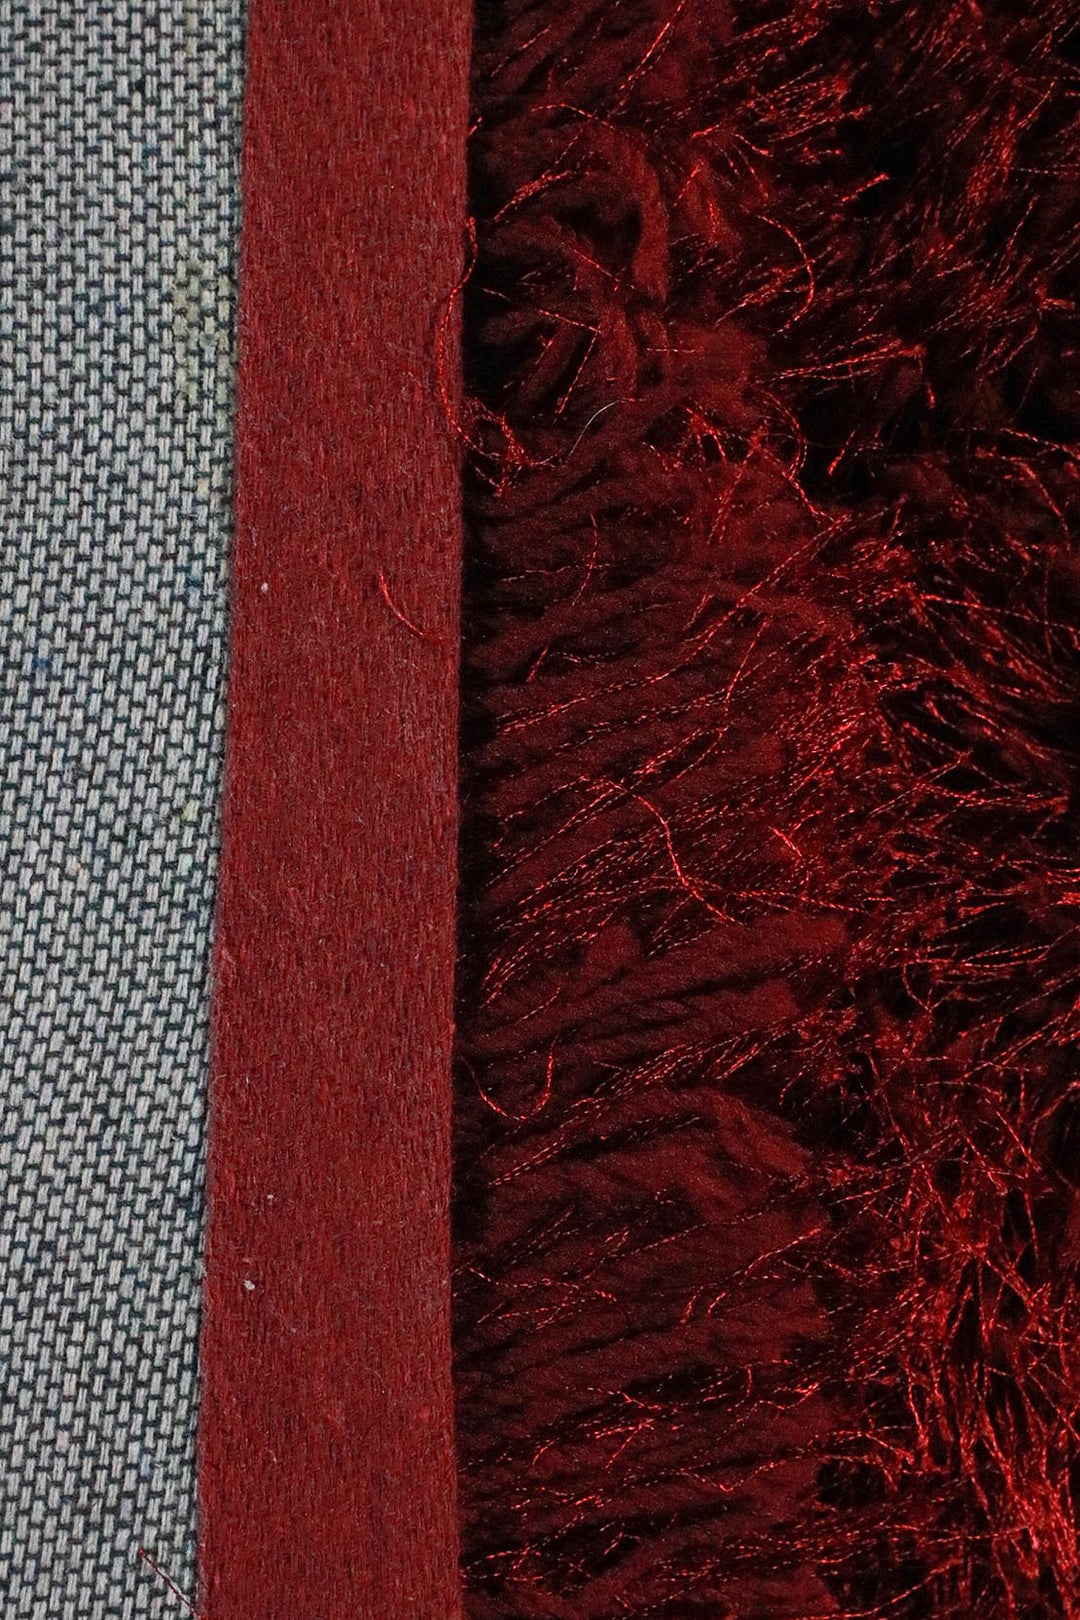 Turkish Plush and Soft  Heaven Shaggy Rug - Maroon - 4.9 x 7.2 FT - Fluffy Furry Floor Decor Rug Heaven Shaggy